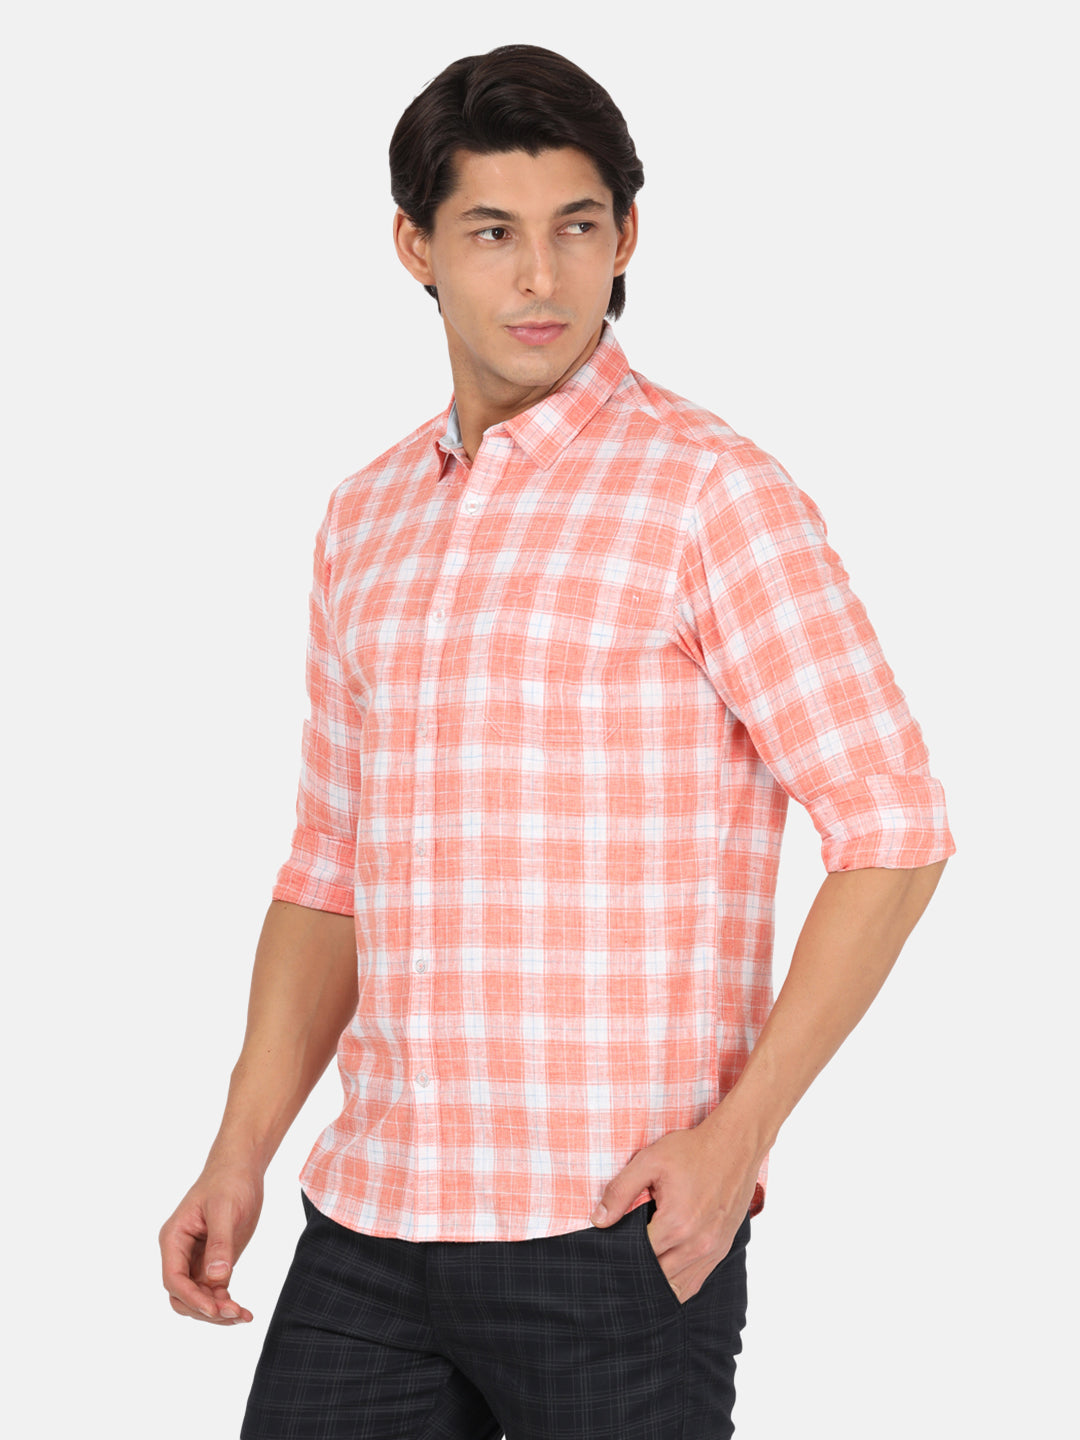 Casual Full Sleeve Comfort Fit Checks Light Orange with Collar Shirt for Men